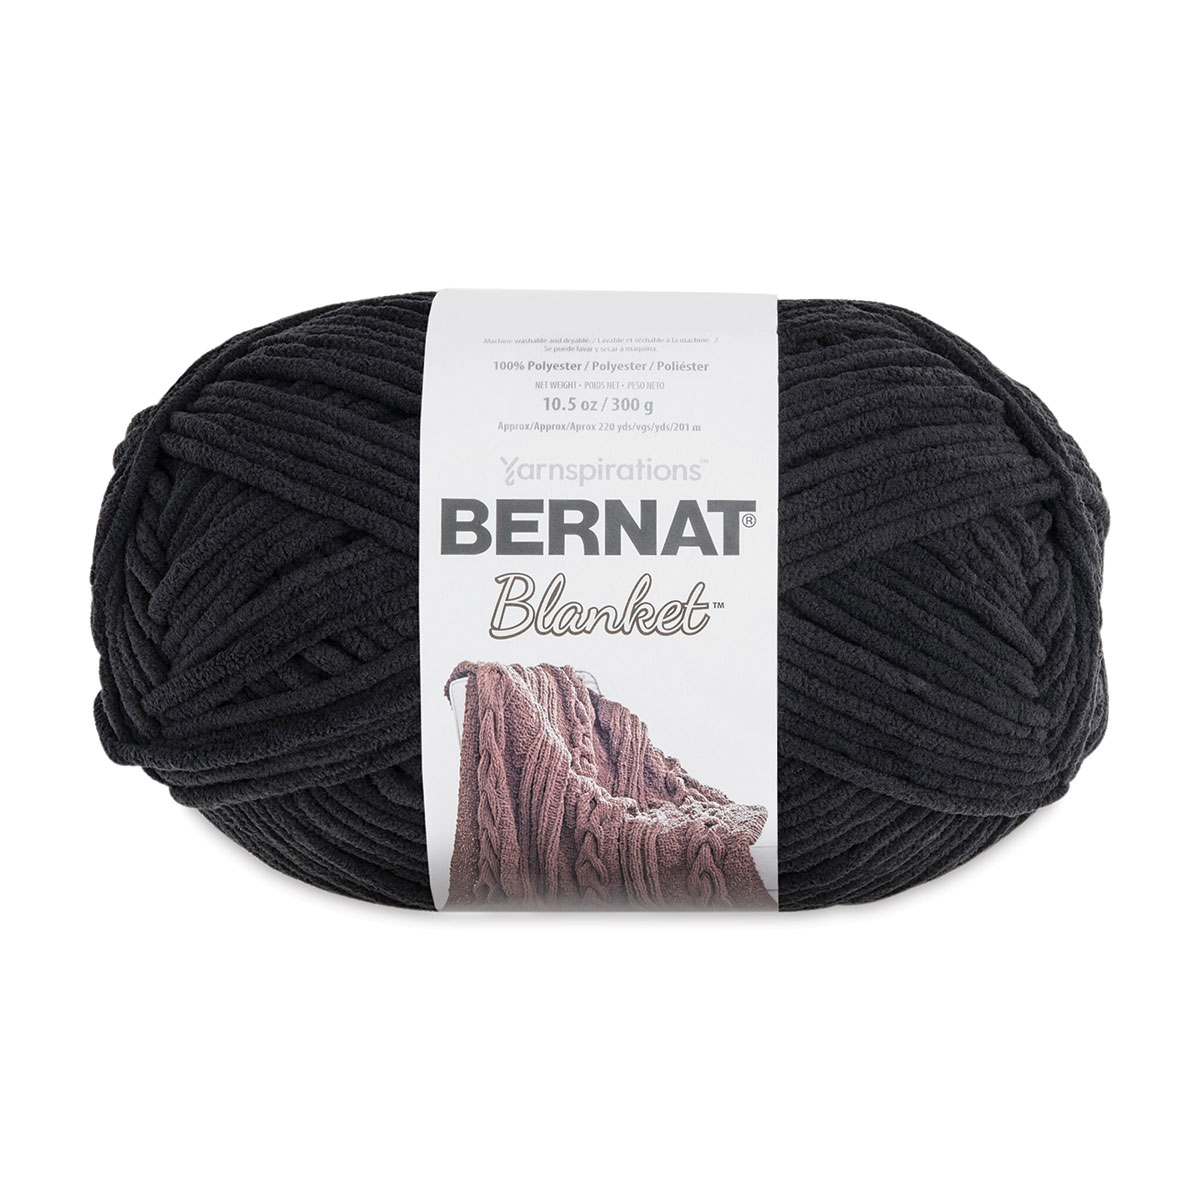 Bernat Blanket Yarn - Pale Grey, 220 yards